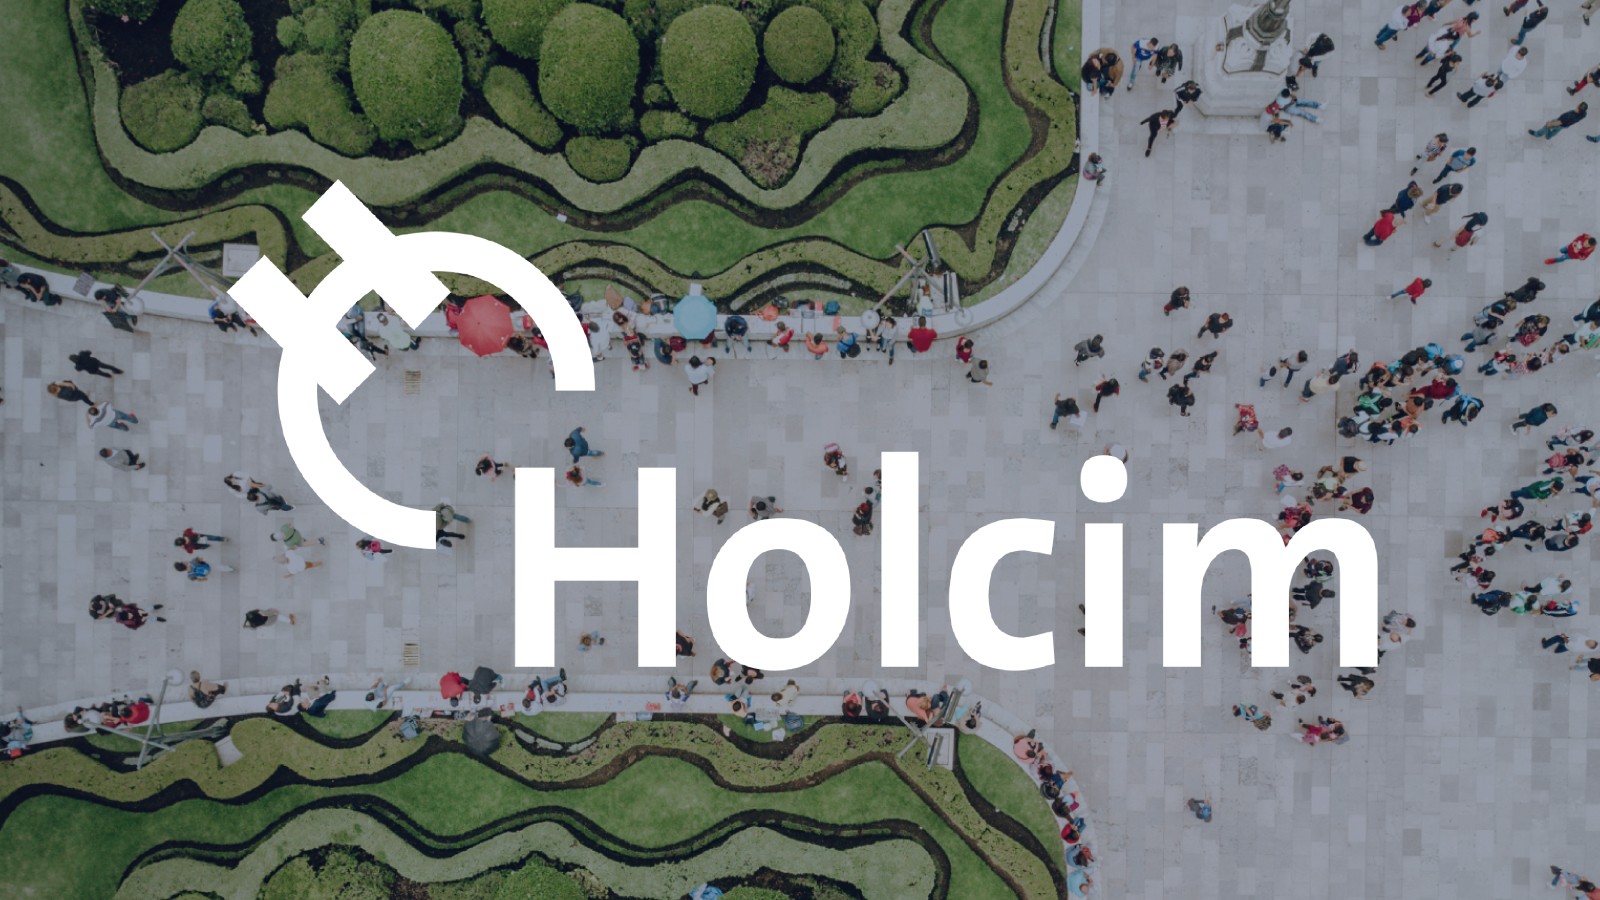 Graphic: Holcim logo over public park space